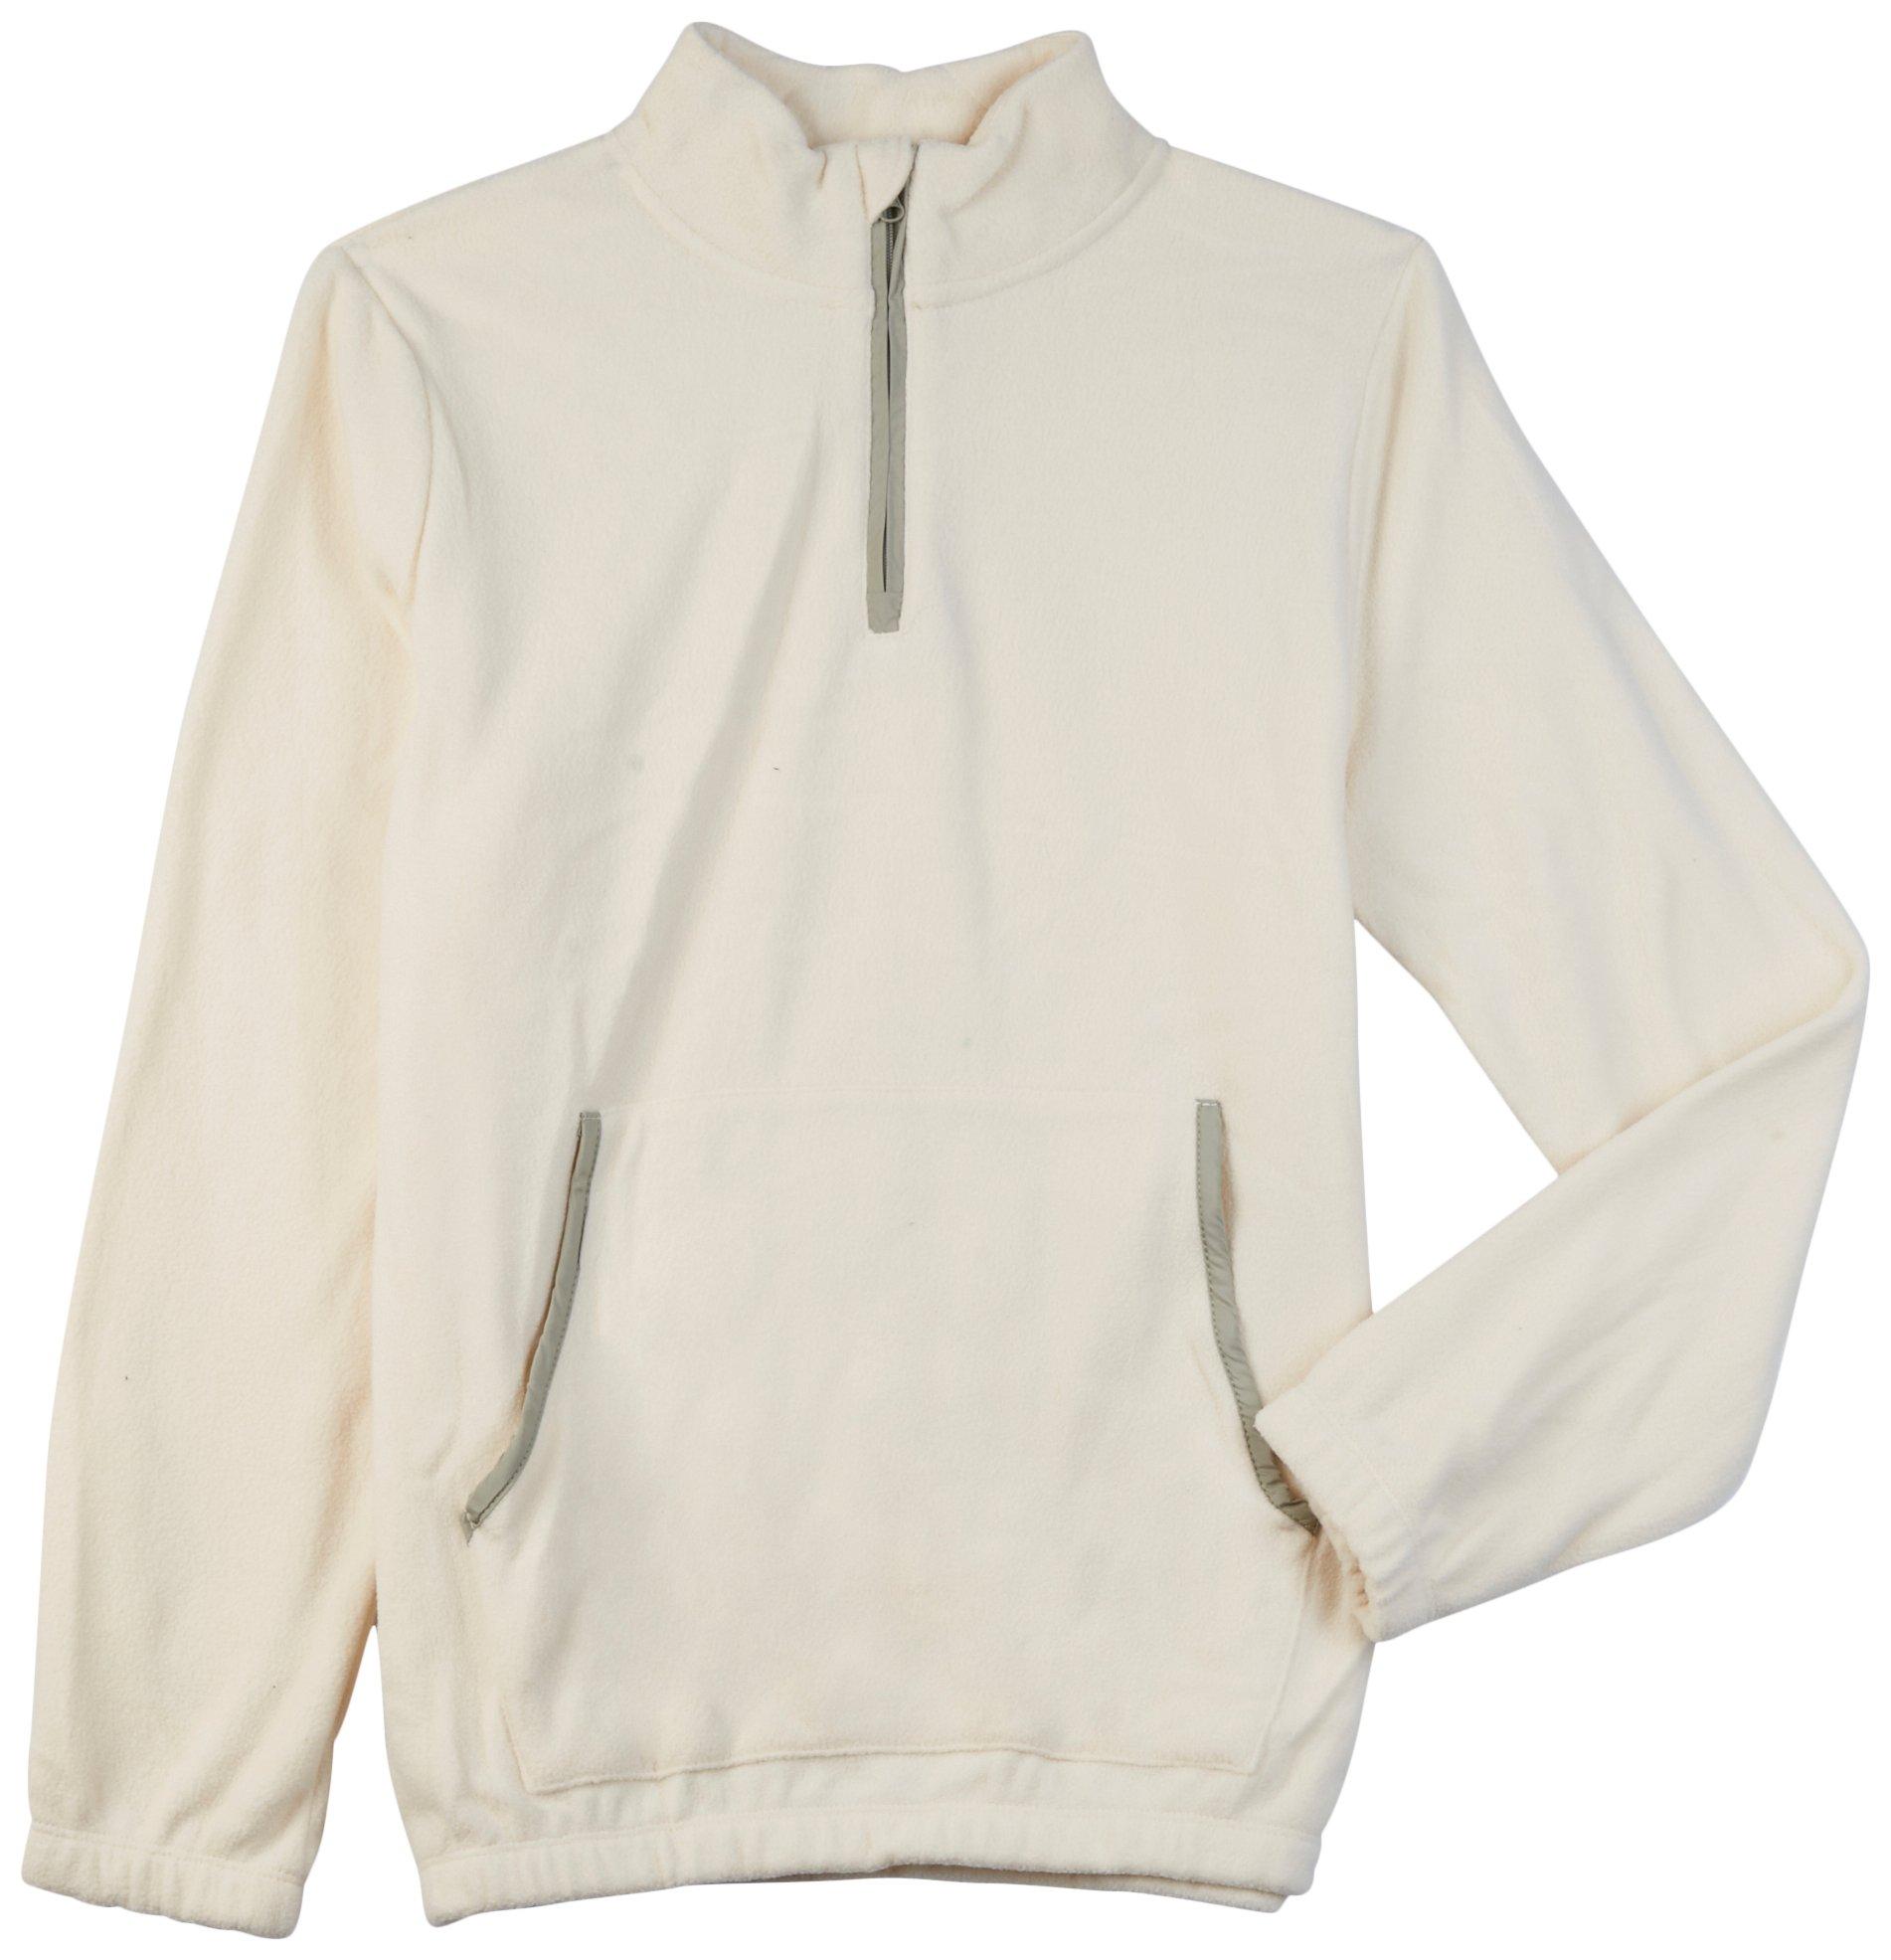 https://images.beallsflorida.com/i/beallsflorida/565-1831-6240-10-yyy/*Big-Boys-1/4-Zip-Fleece-Sweater*?$product$&fmt=auto&qlt=default